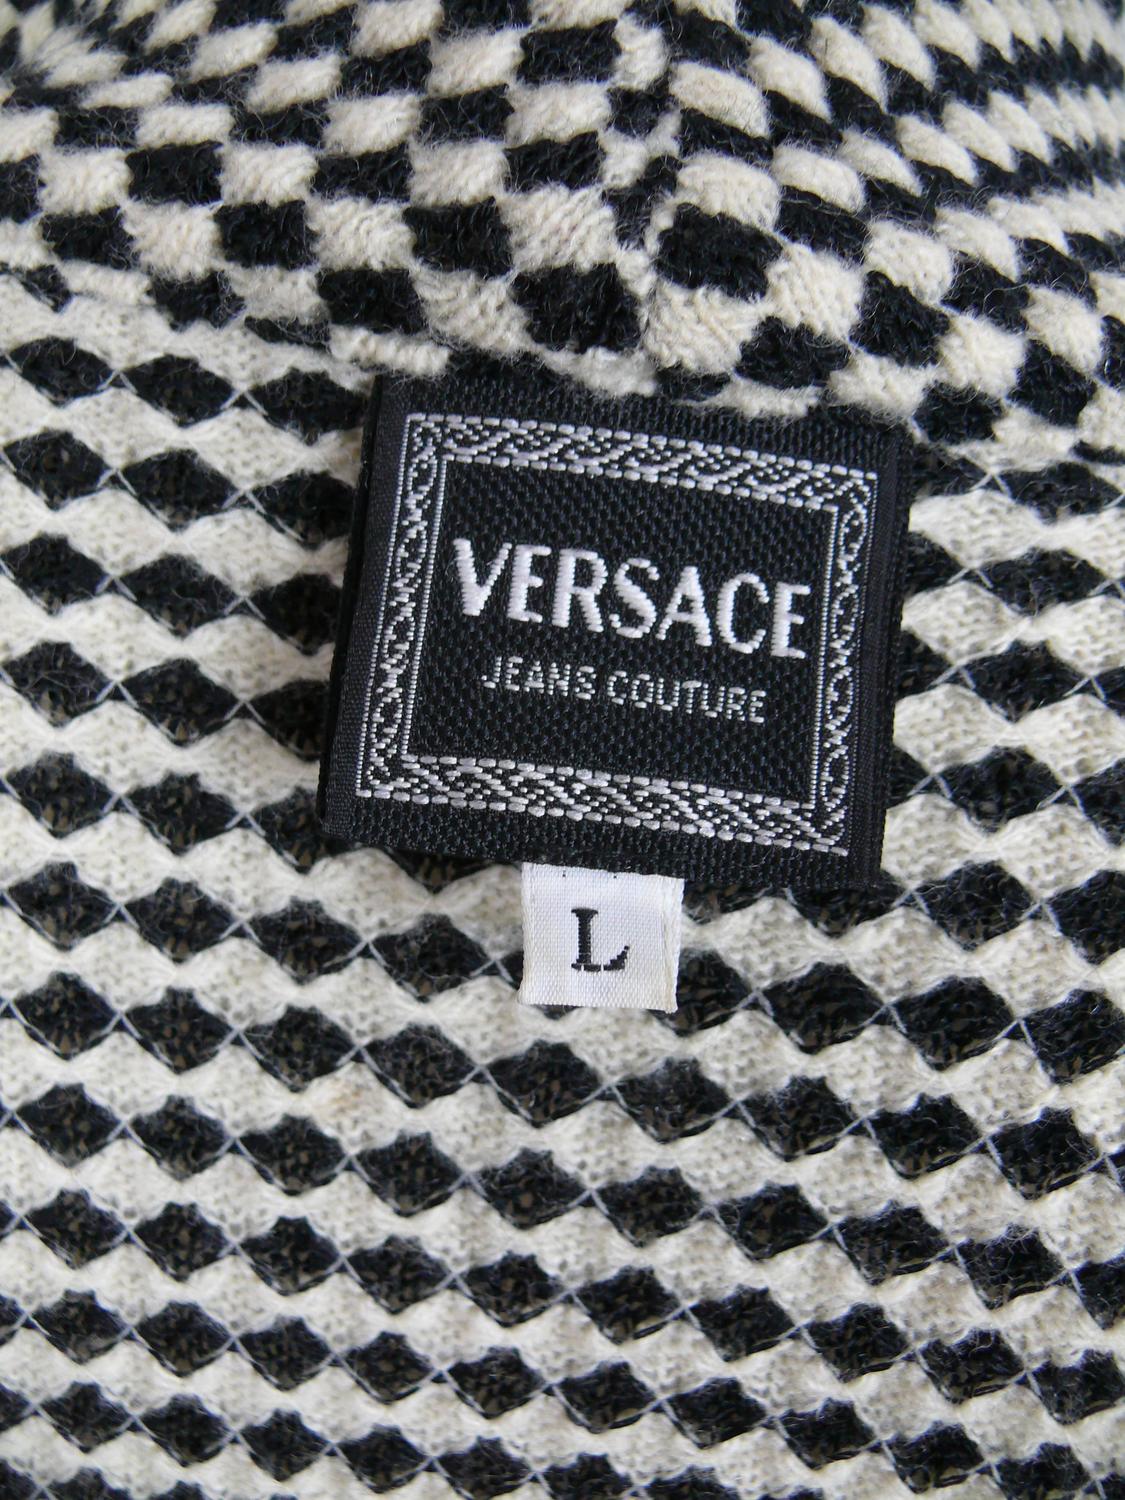 Versace Jeans Couture Label - Juleteagyd